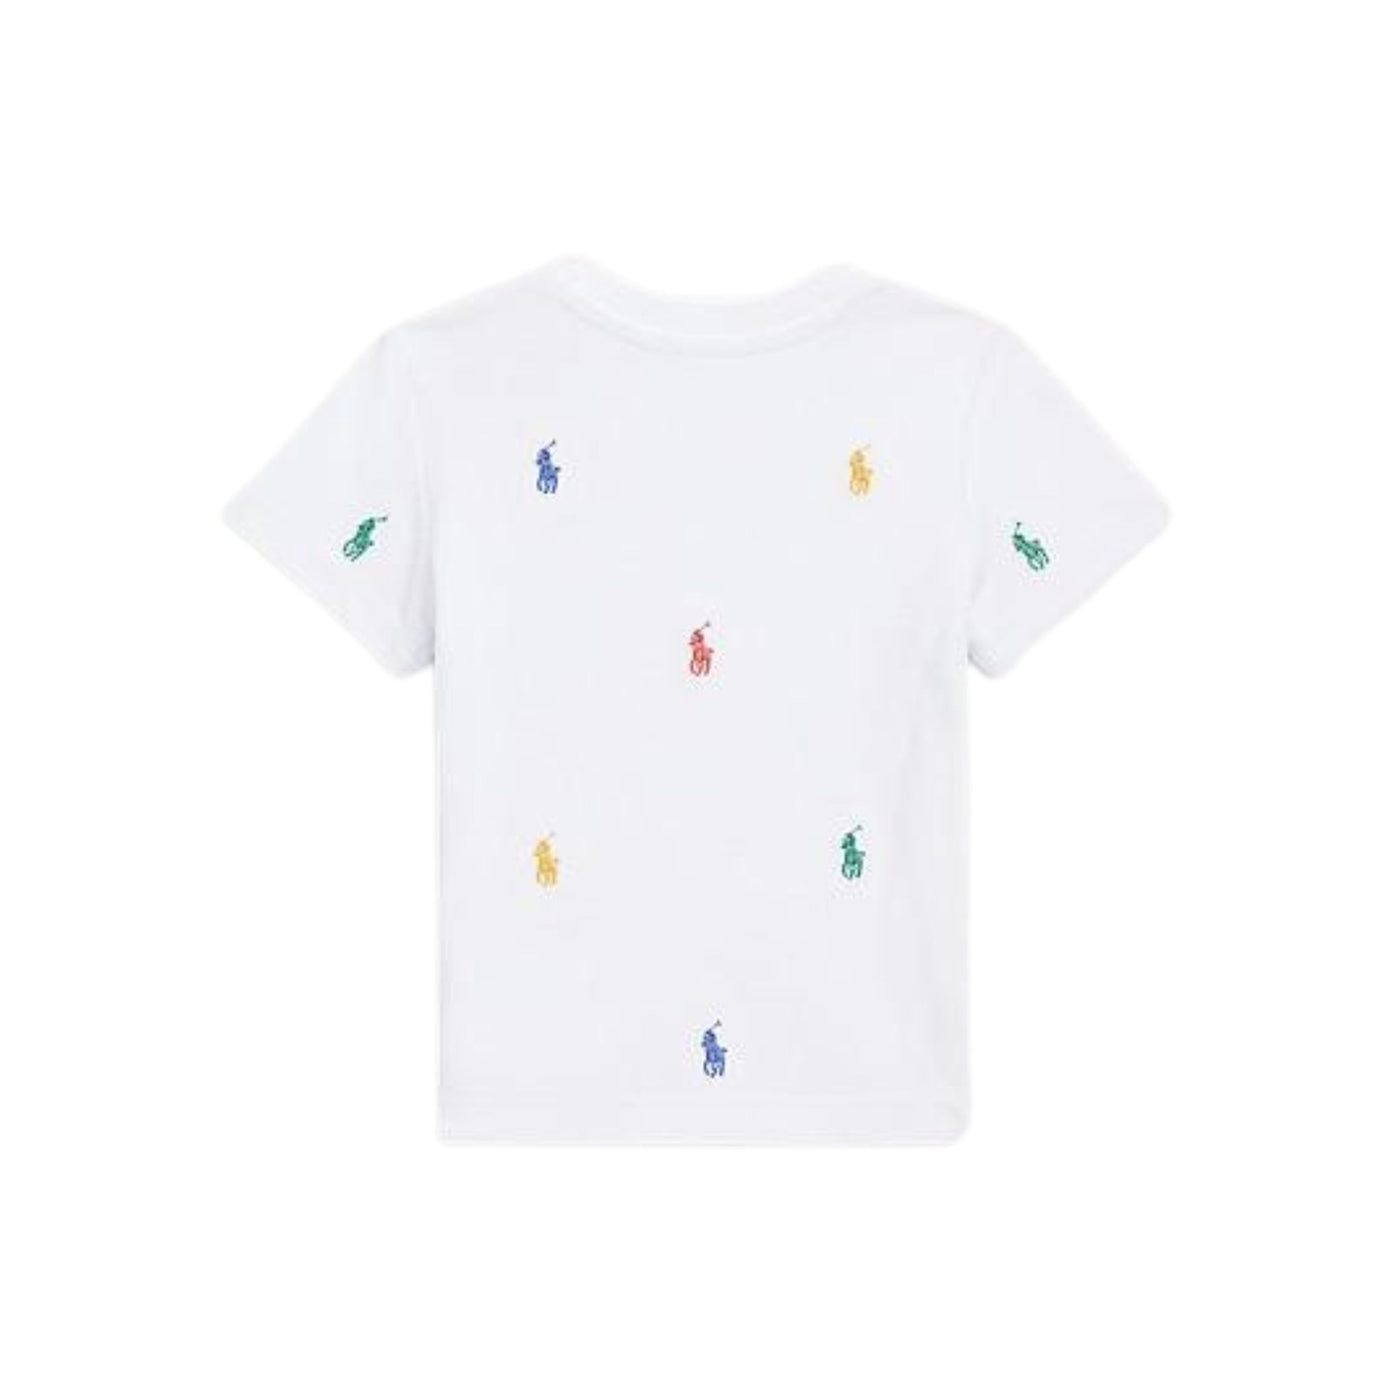 T-shirt neonato bianca firmata Polo Ralph Lauren vista retro